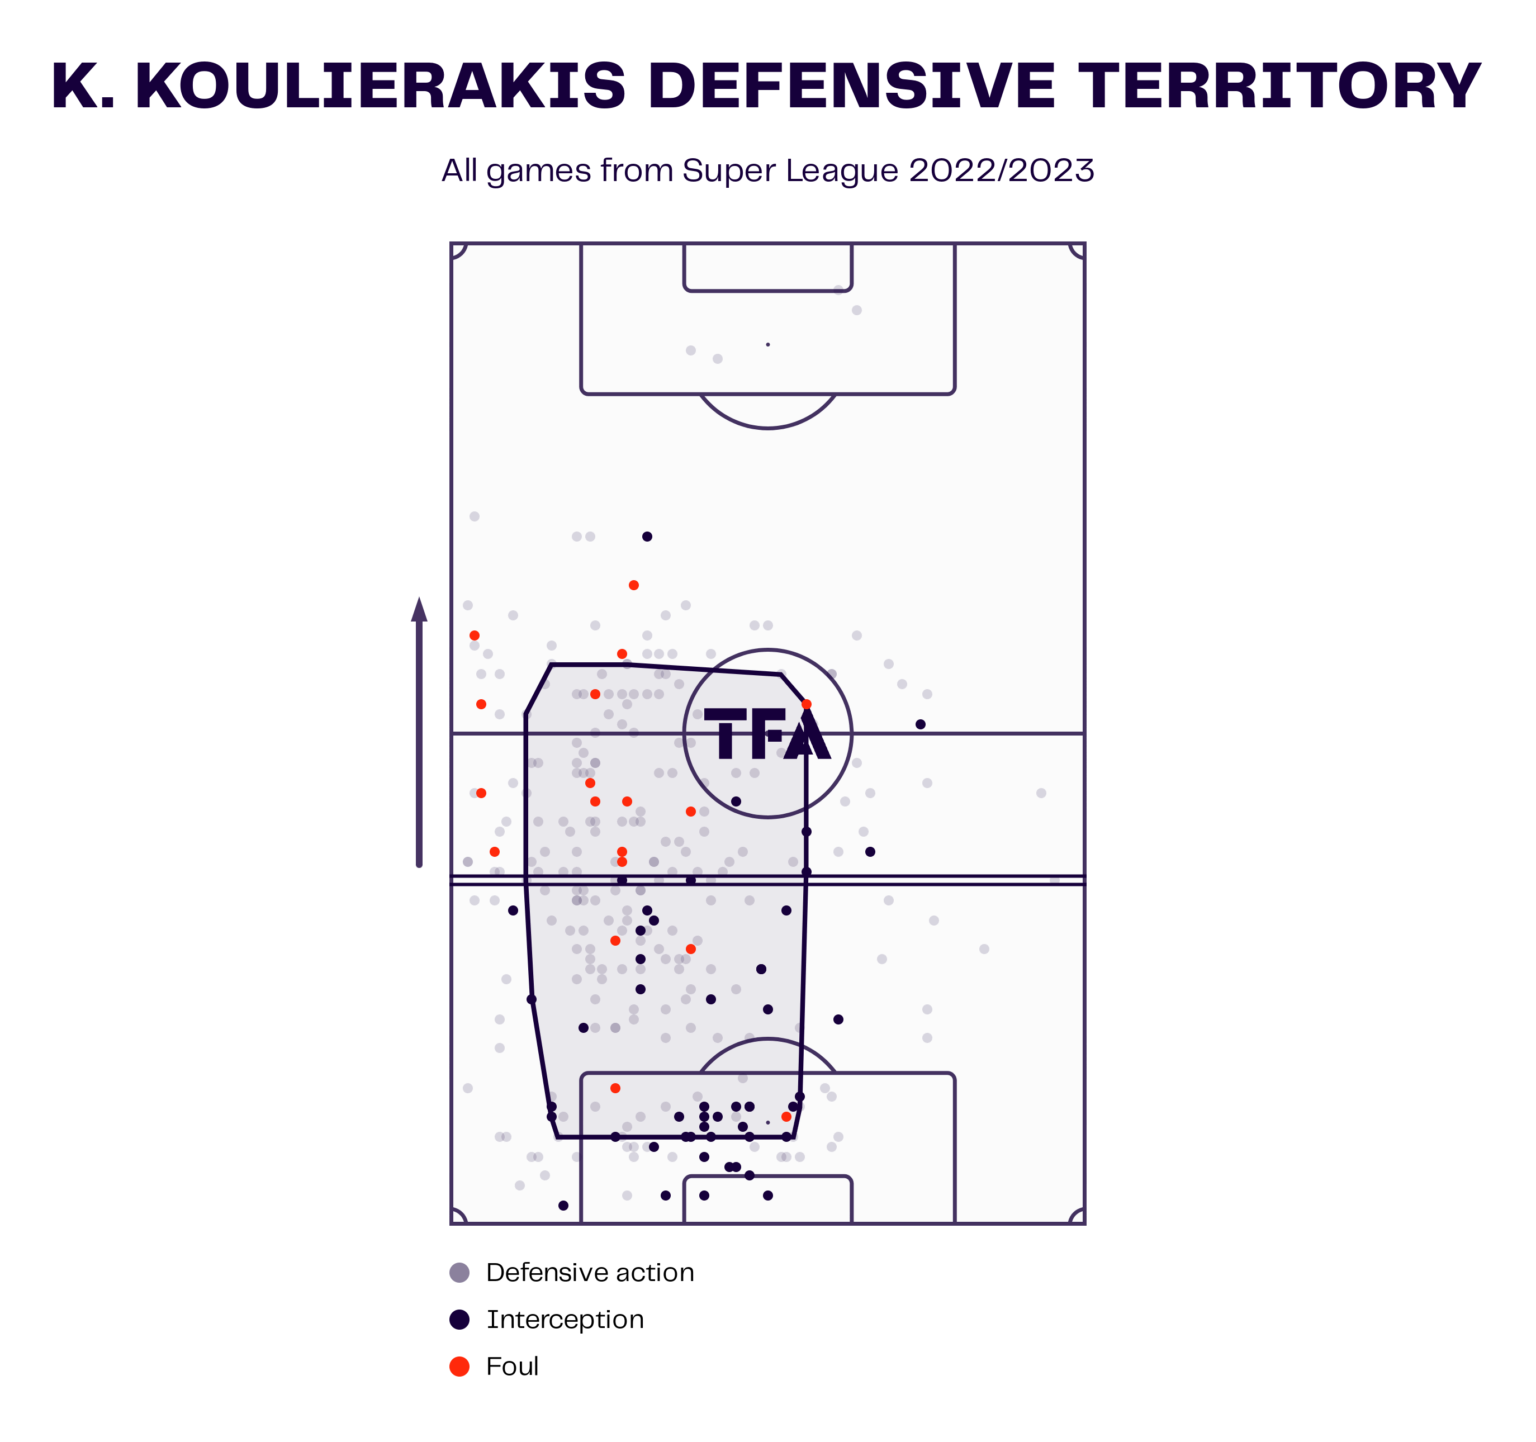 k-koulierakis-defensive-territory-1536x1442.png